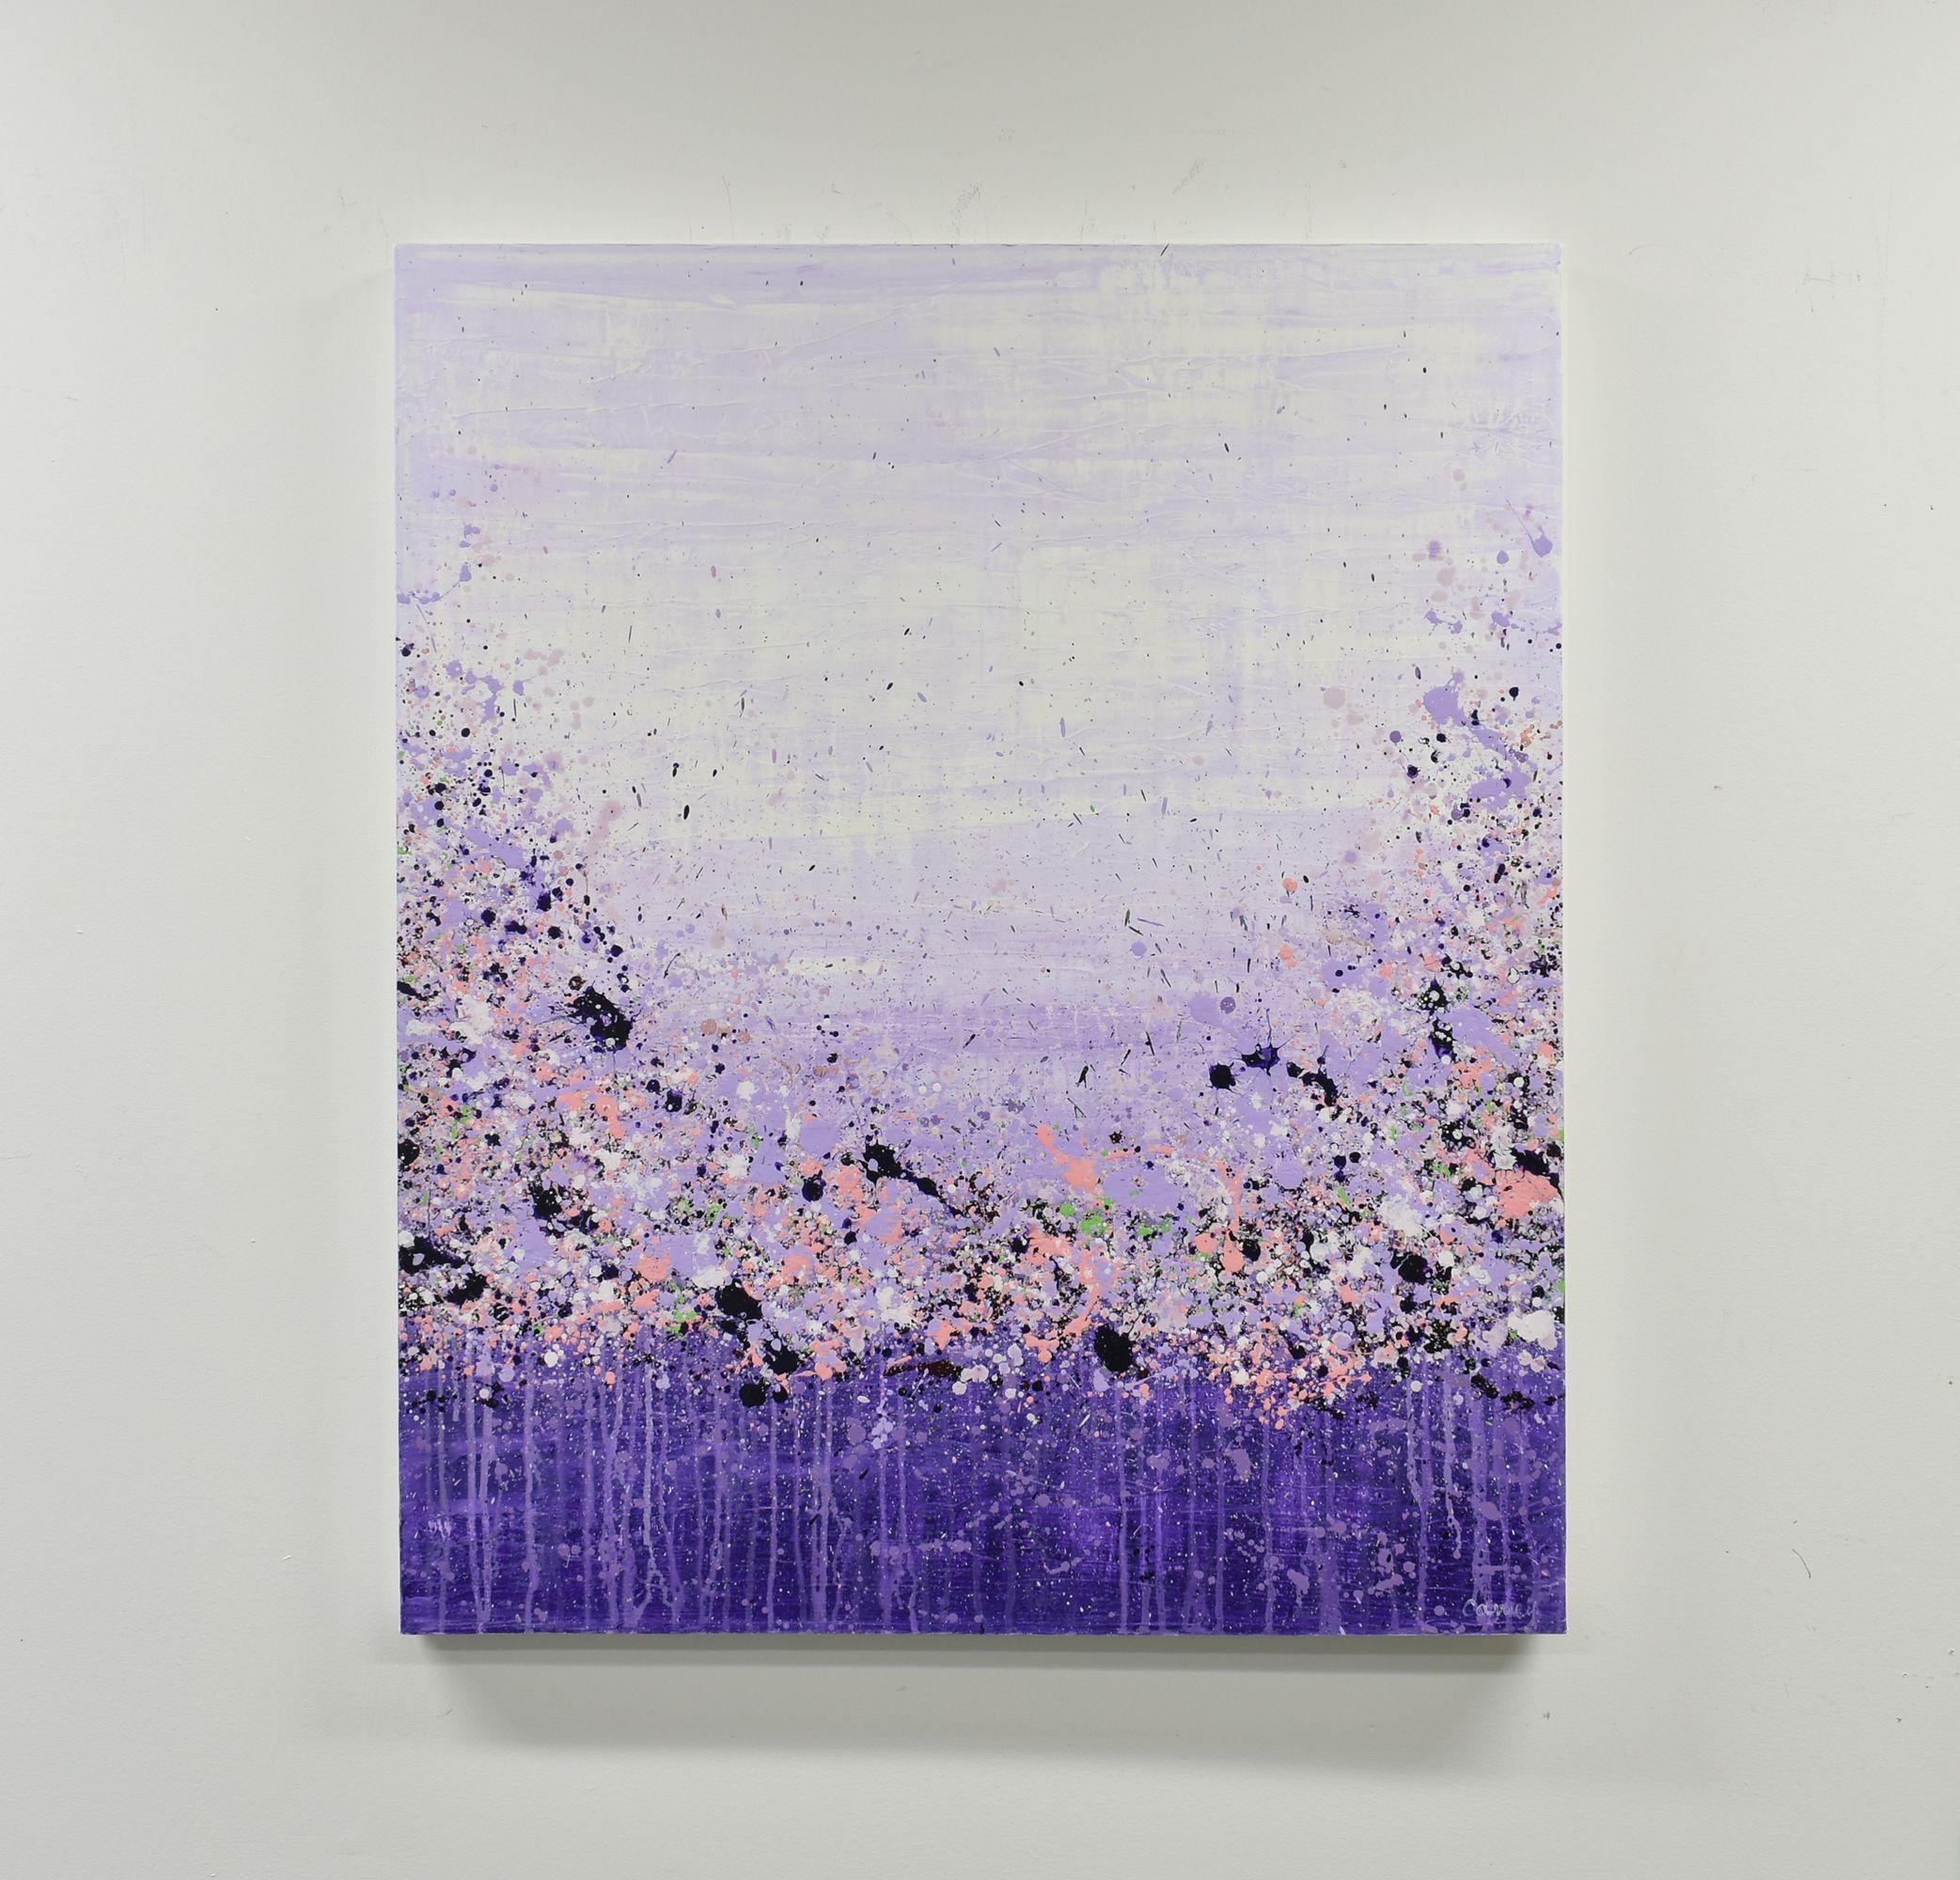 â€œPurple Sensationâ€ is a floral abstract painting in acrylic on canvas. It was created in beautiful shades of pink, purple, lilac and lavender.    This painting is from the 